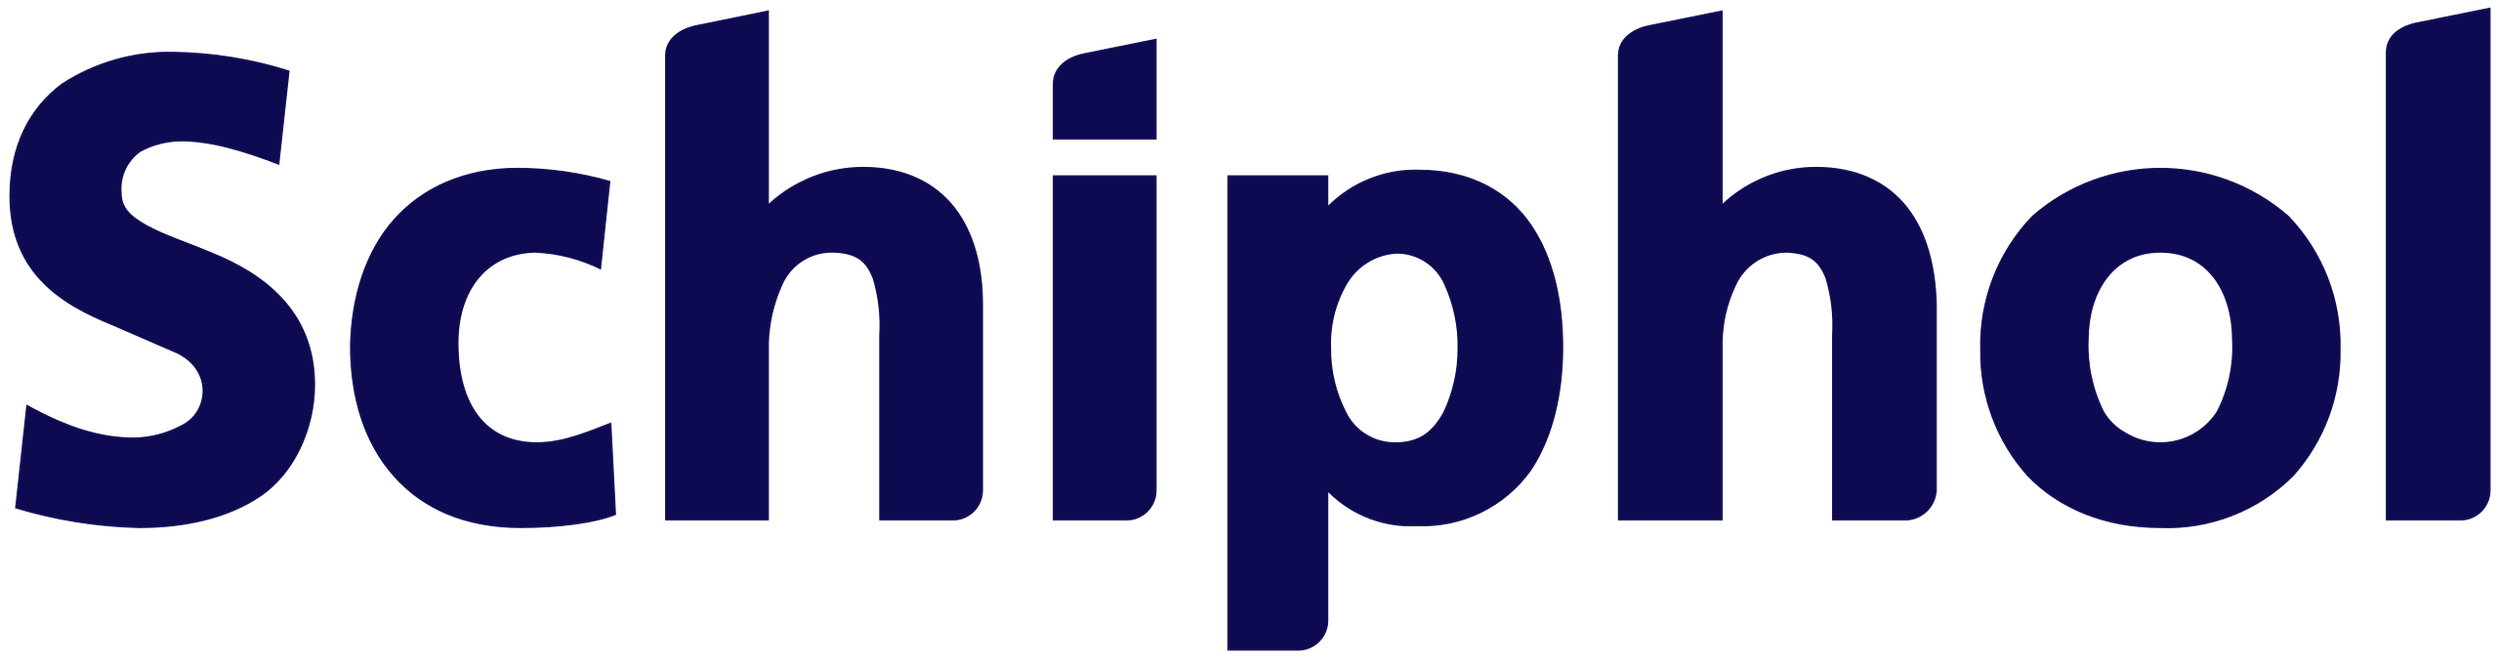 Amsterdam_Airport_Schiphol_logo_(2018–present).svg.png